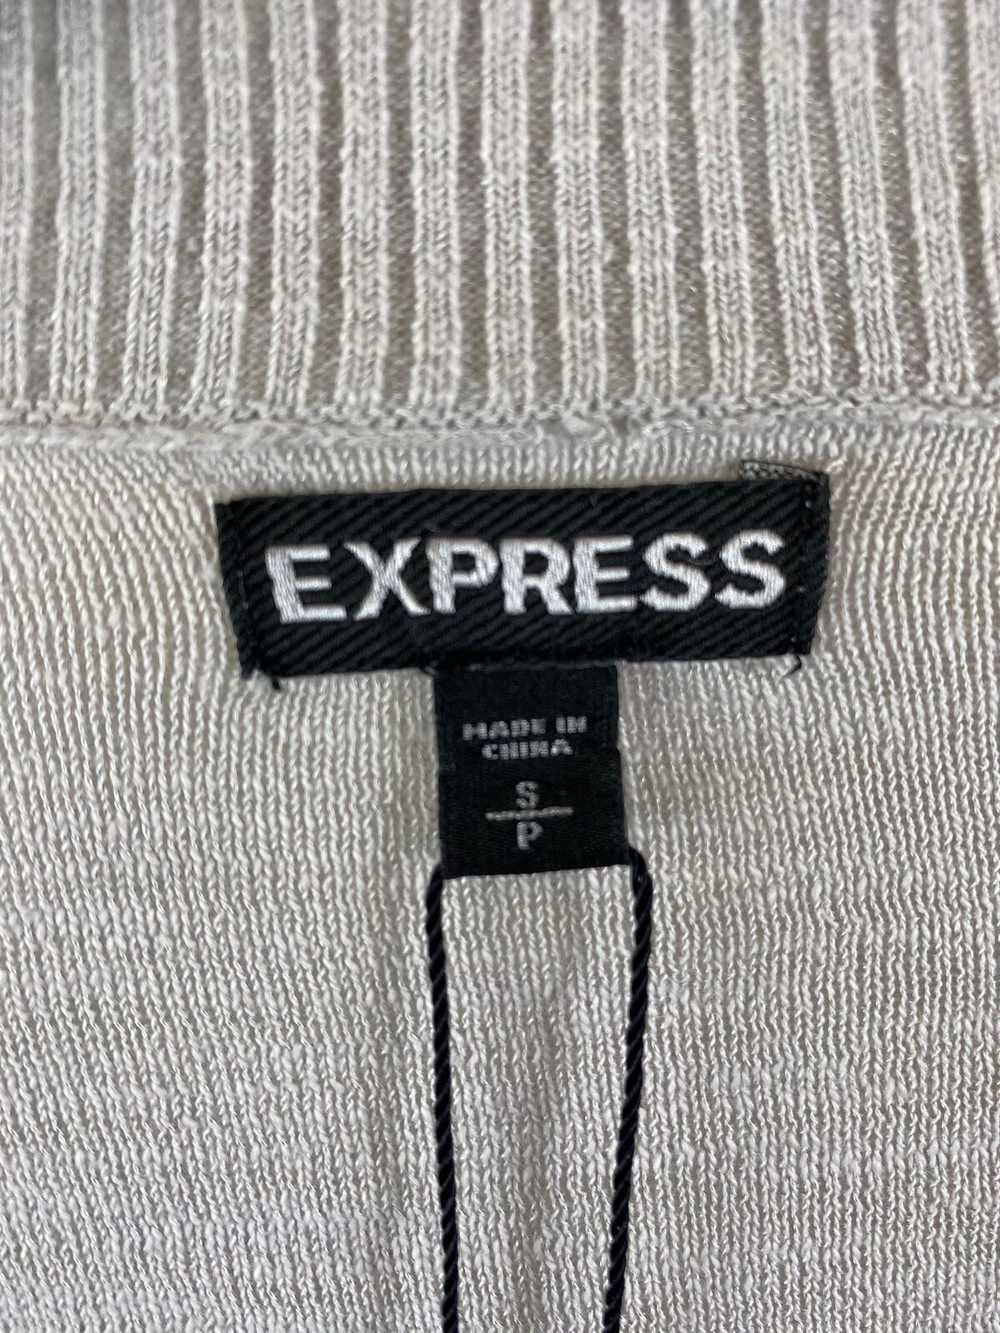 Express Women Gray Cardigan Sweater S/P NWT - image 3